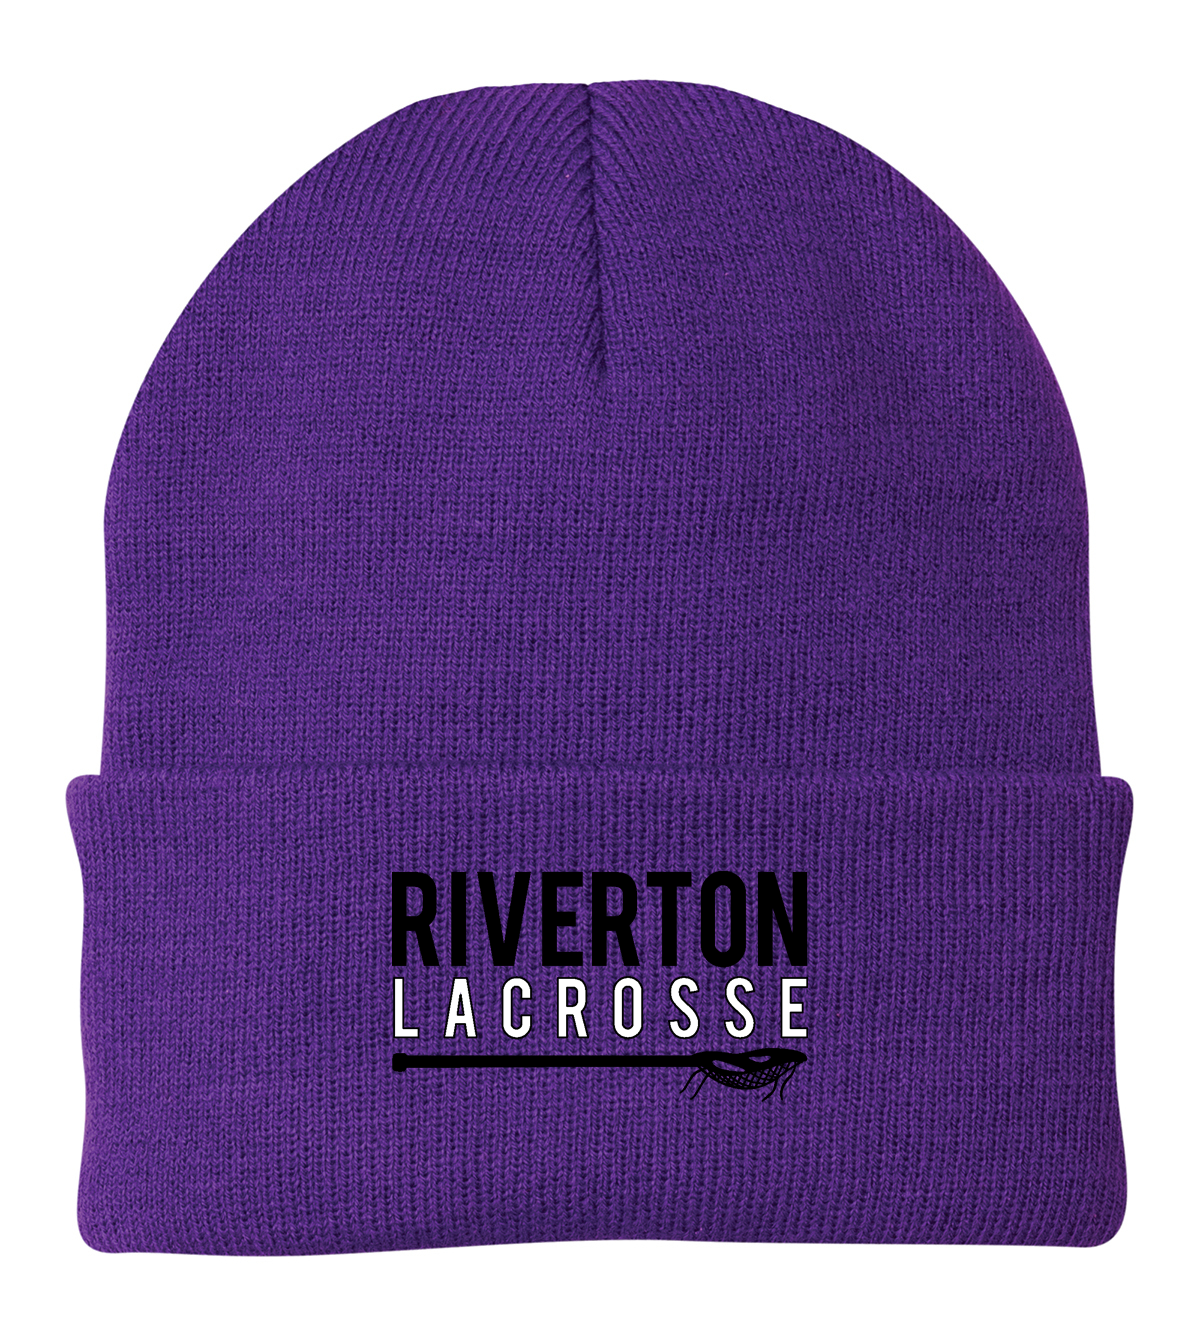 Riverton Lacrosse Knit Beanie